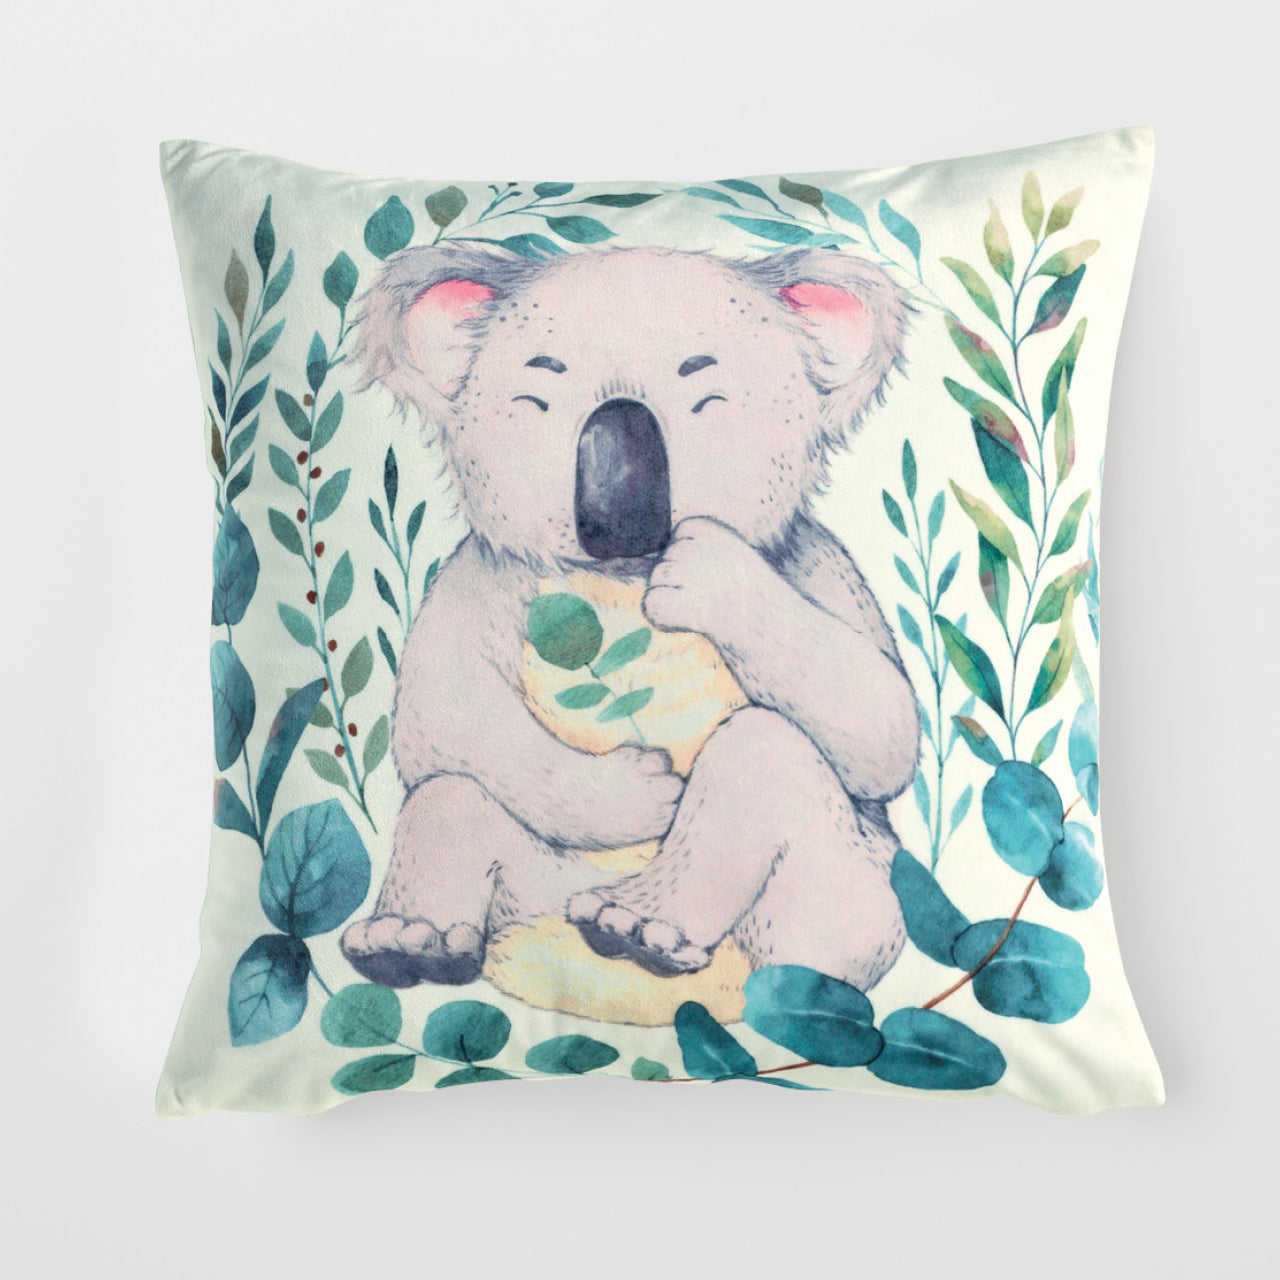 Koala Cushion Cover on a white background